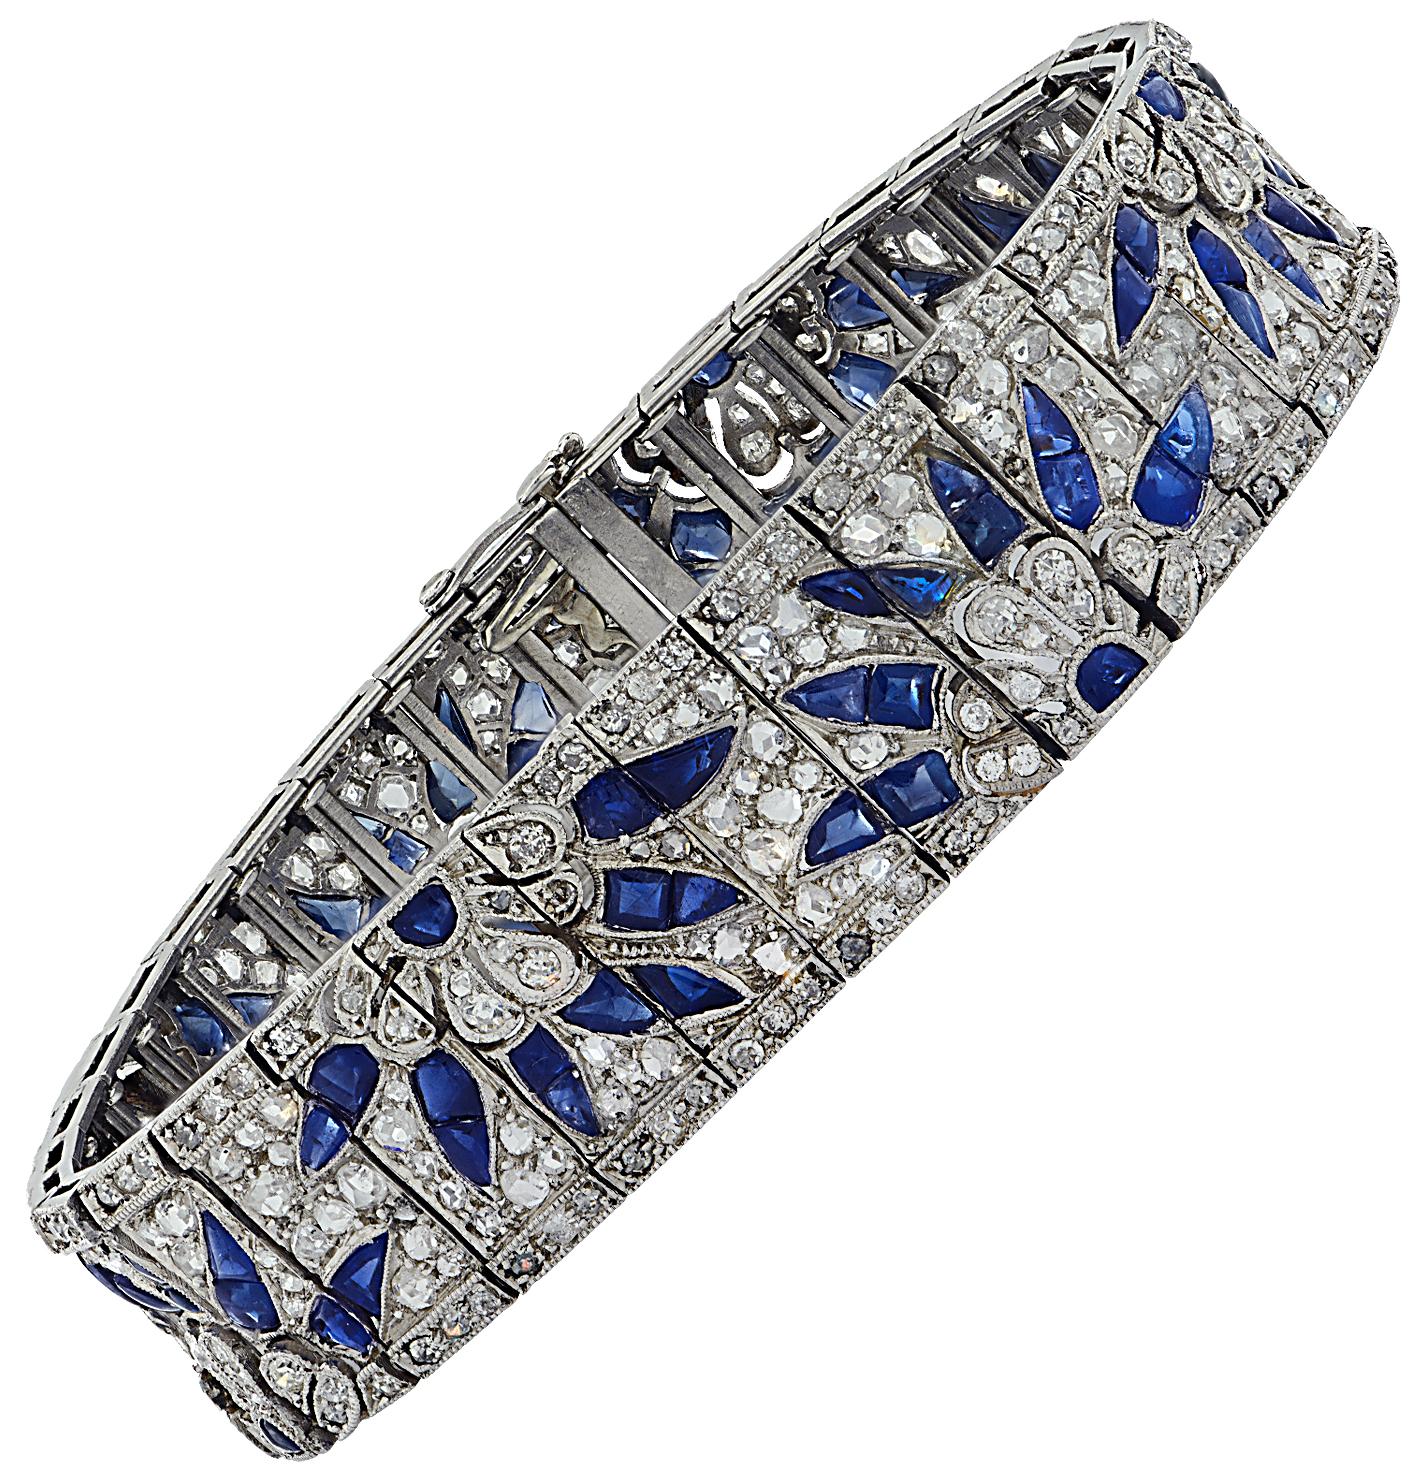 Women's Art Deco 14.64 Carat Diamond & Sapphire Bracelet, circa 1920s